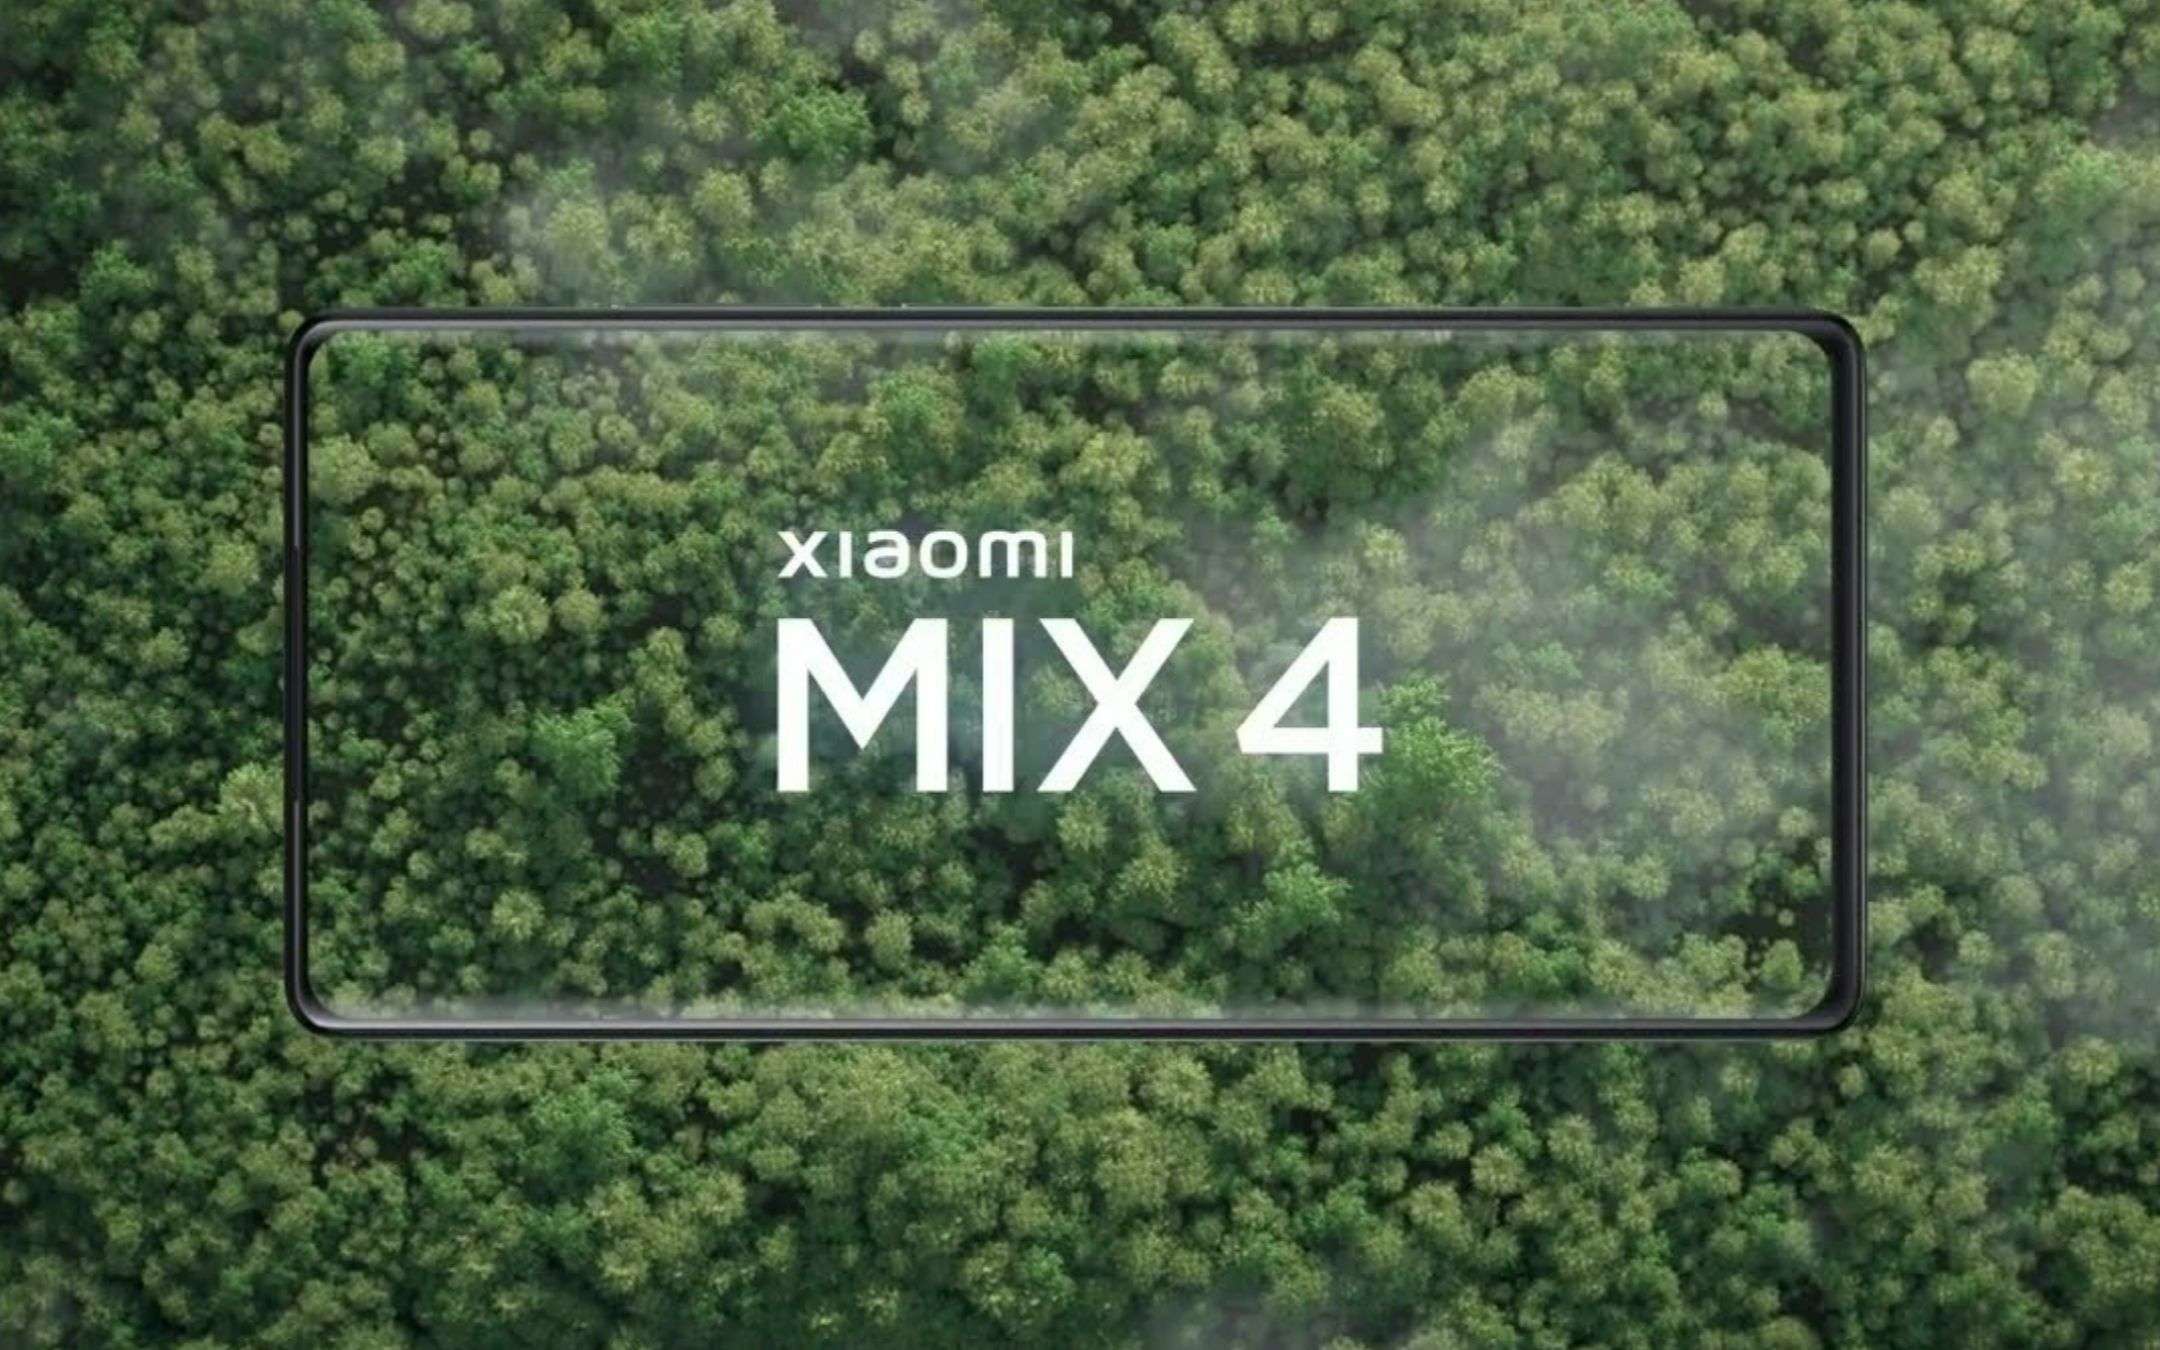 Xiaomi Mi Mix 4 in due video teaser: è MOZZAFIATO